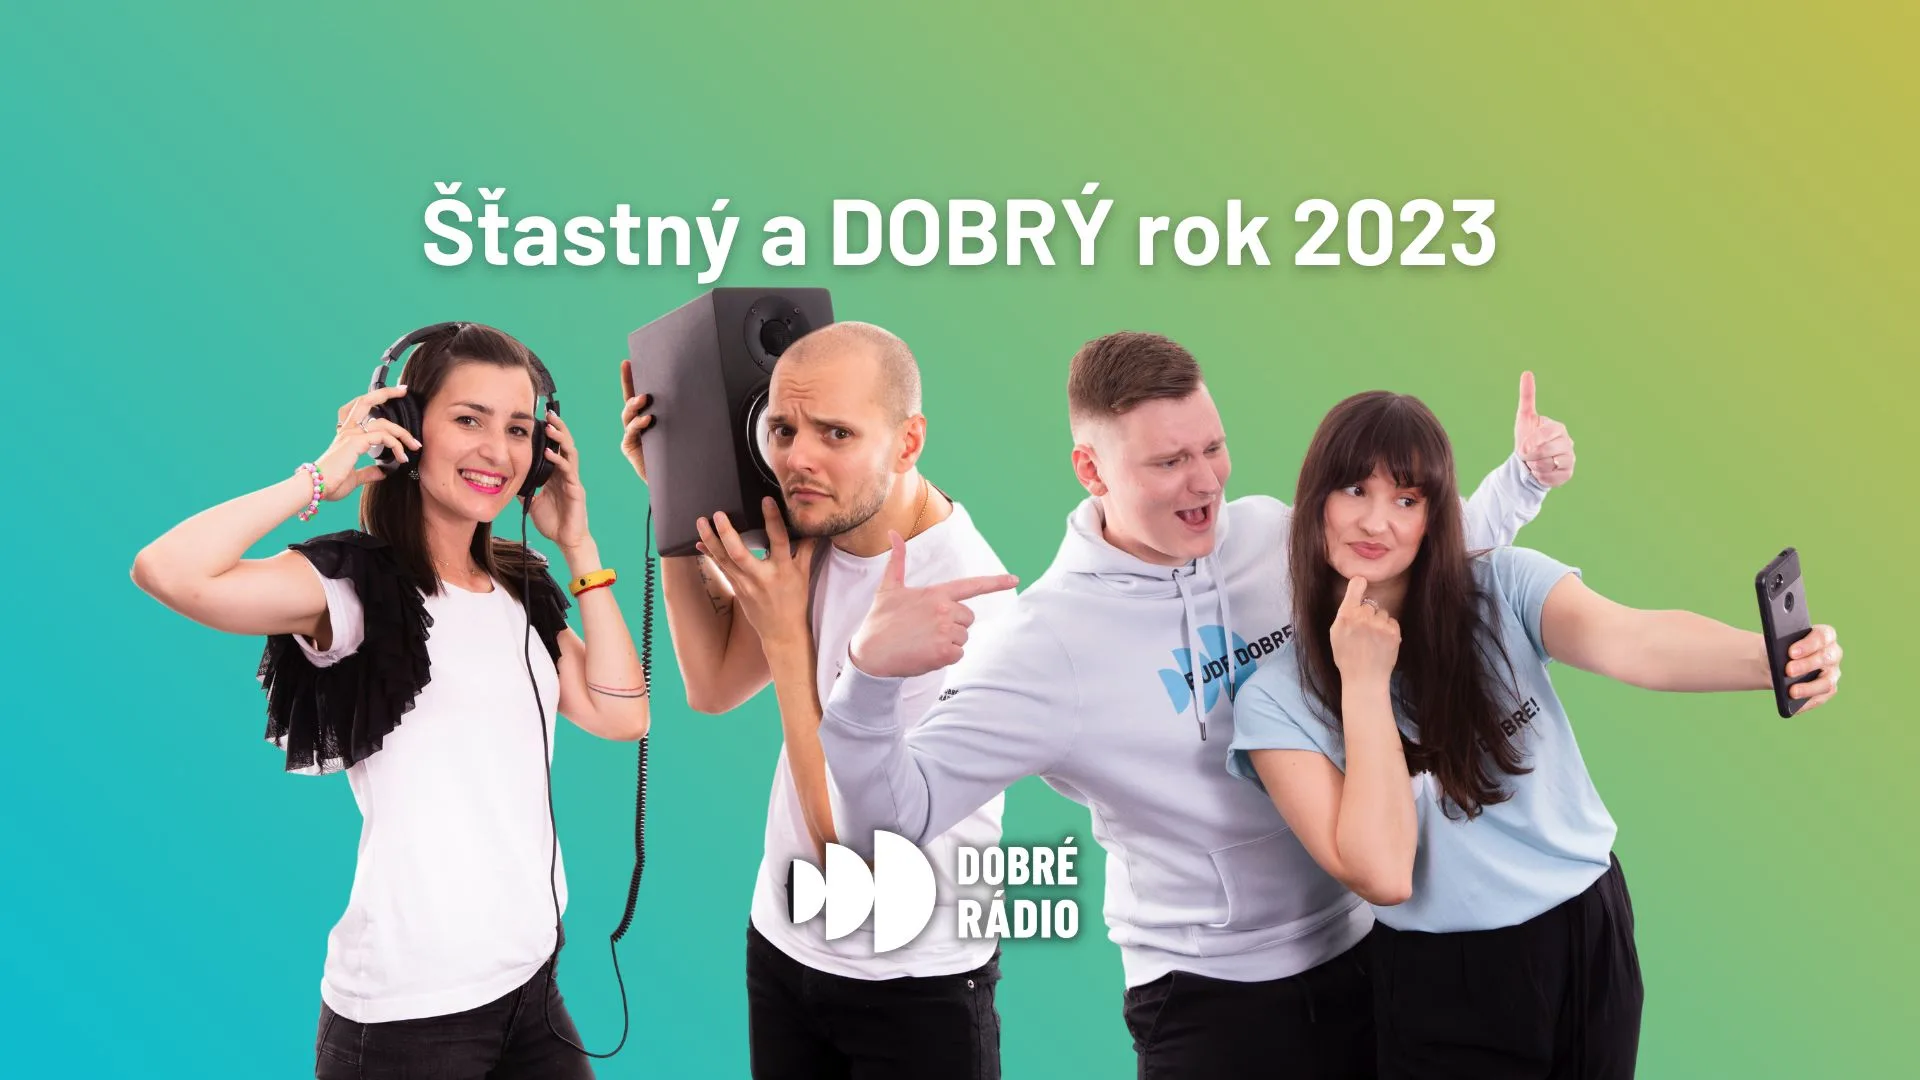 Dobre-radio_Stastny-novy-rok-2023